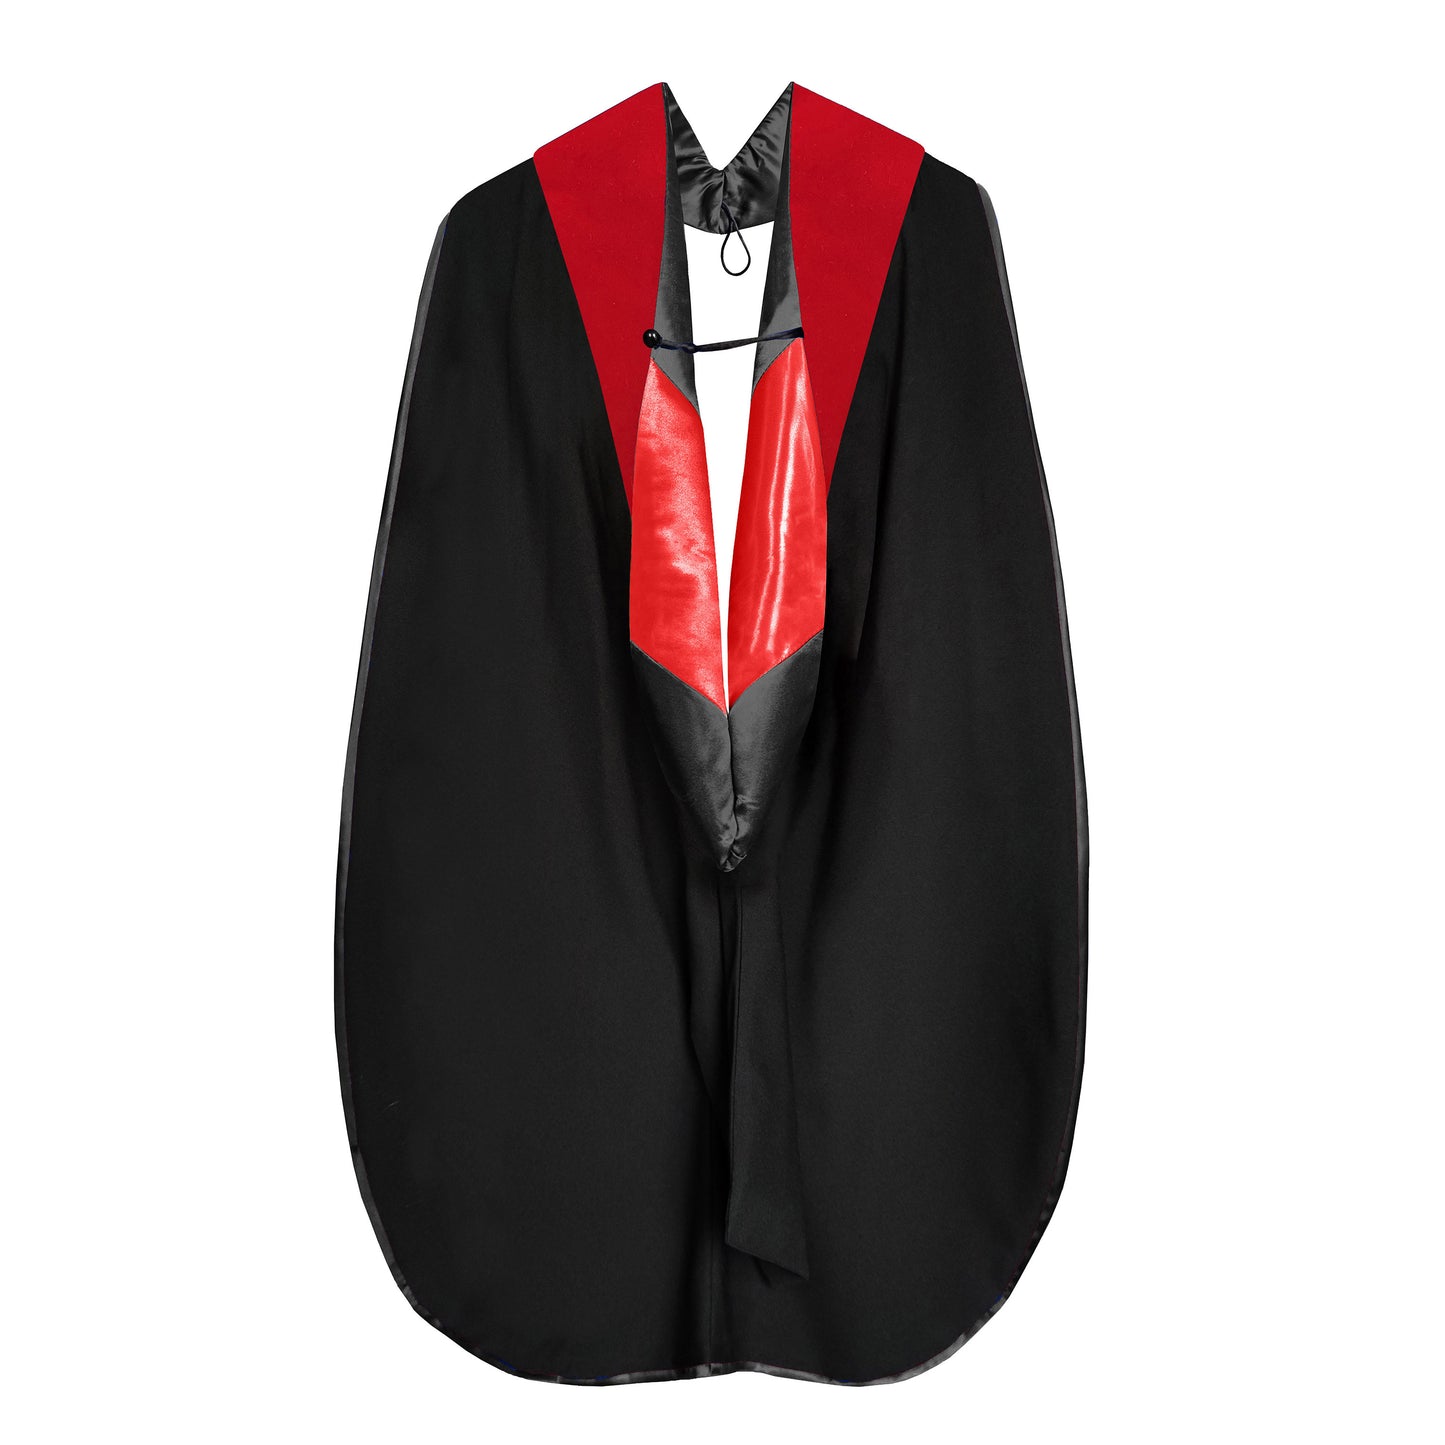 Classic Doctoral Graduation Hood for Various Degrees and Schools-CA graduation